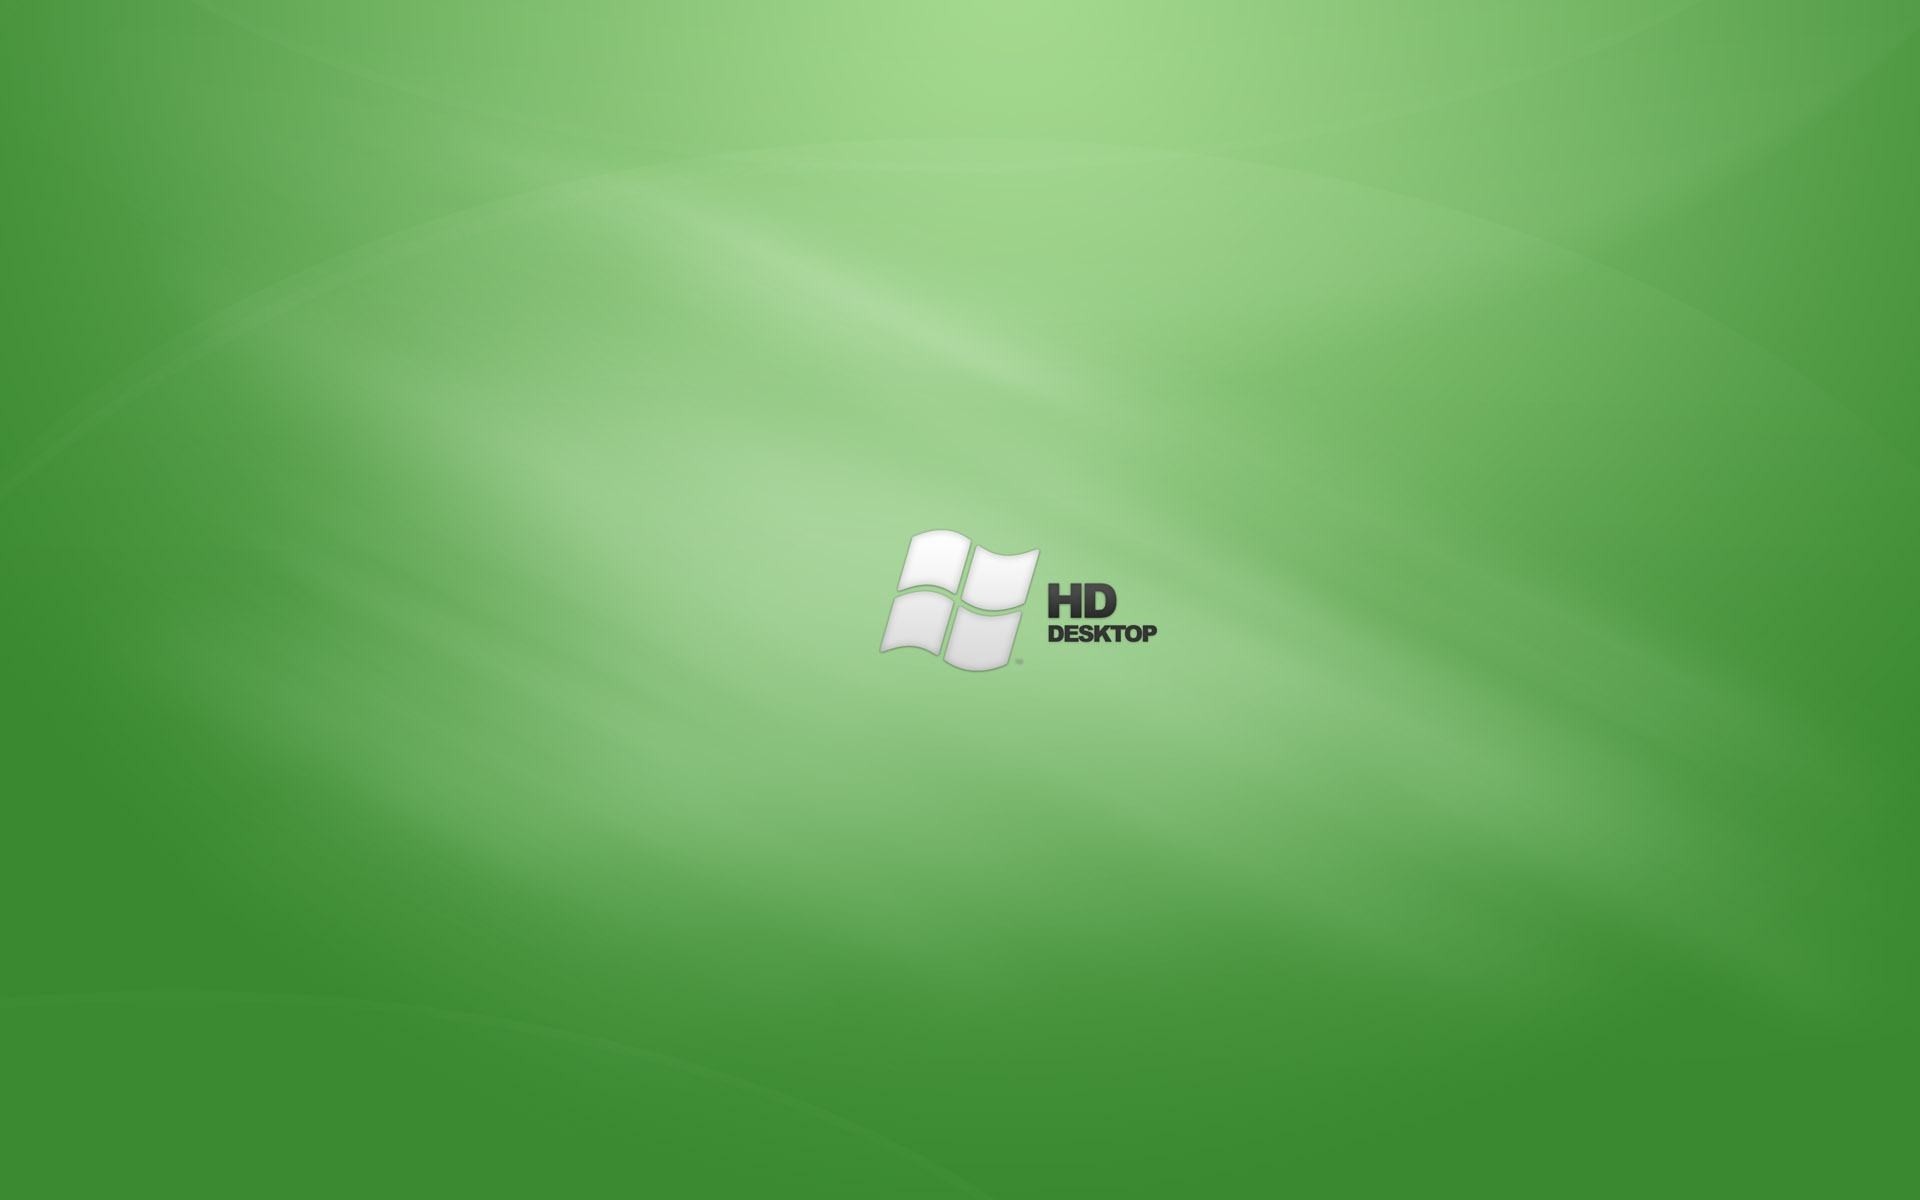 1920x1200 Wallpapers Backgrounds - Microsoft Windows Vista green theme wallpaper  desktop